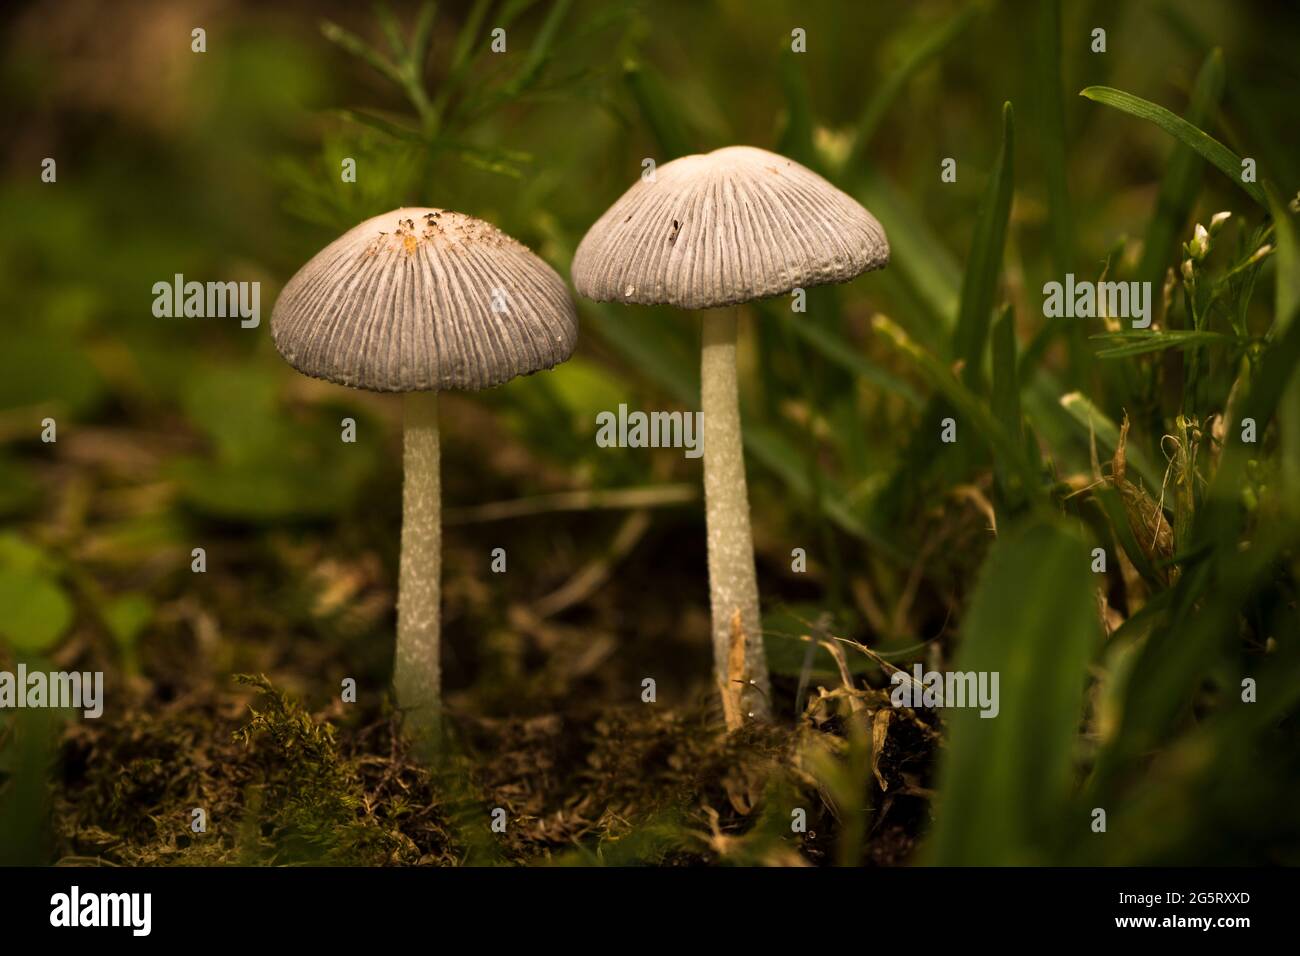 Paar kleine Pilze im Boden - Makroaufnahme Stockfoto